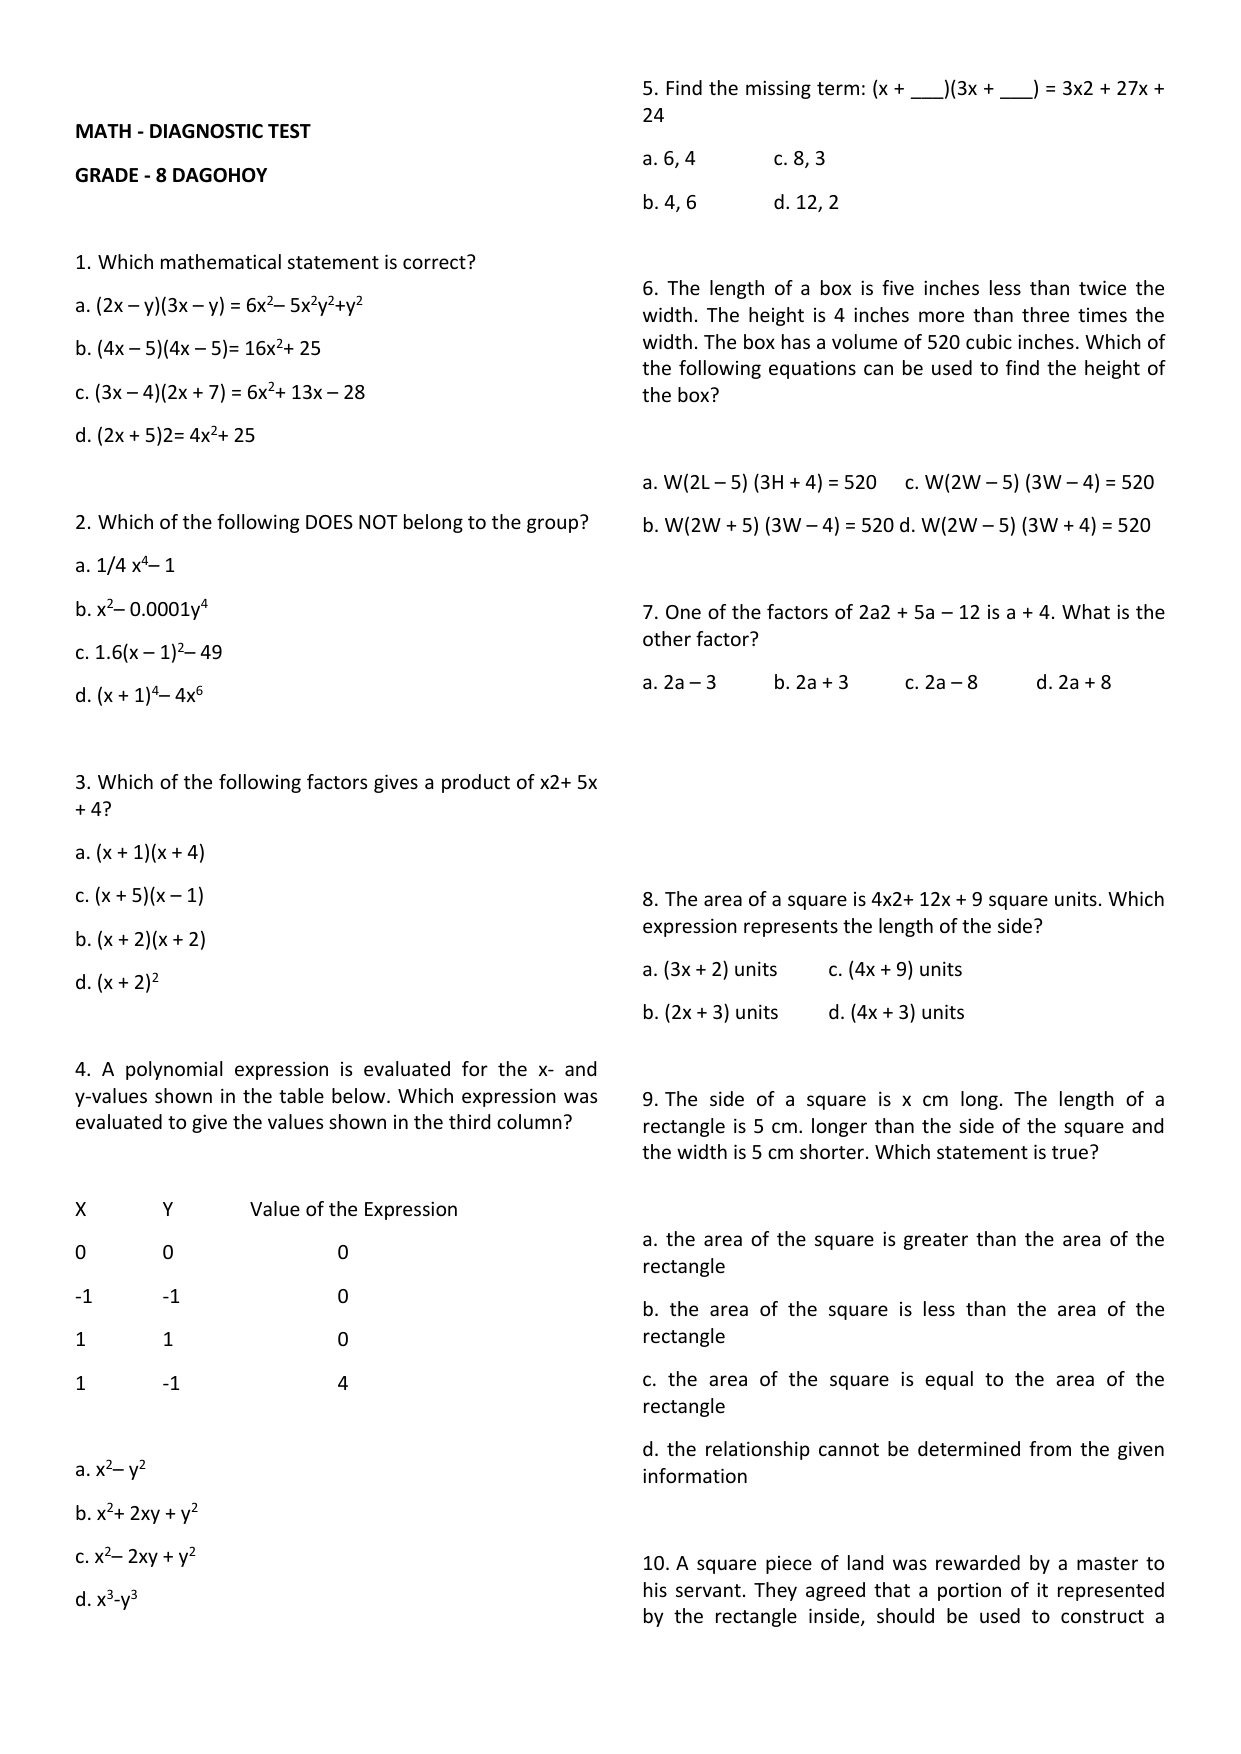 diagnostic-test-in-math-2-part-1-worksheet